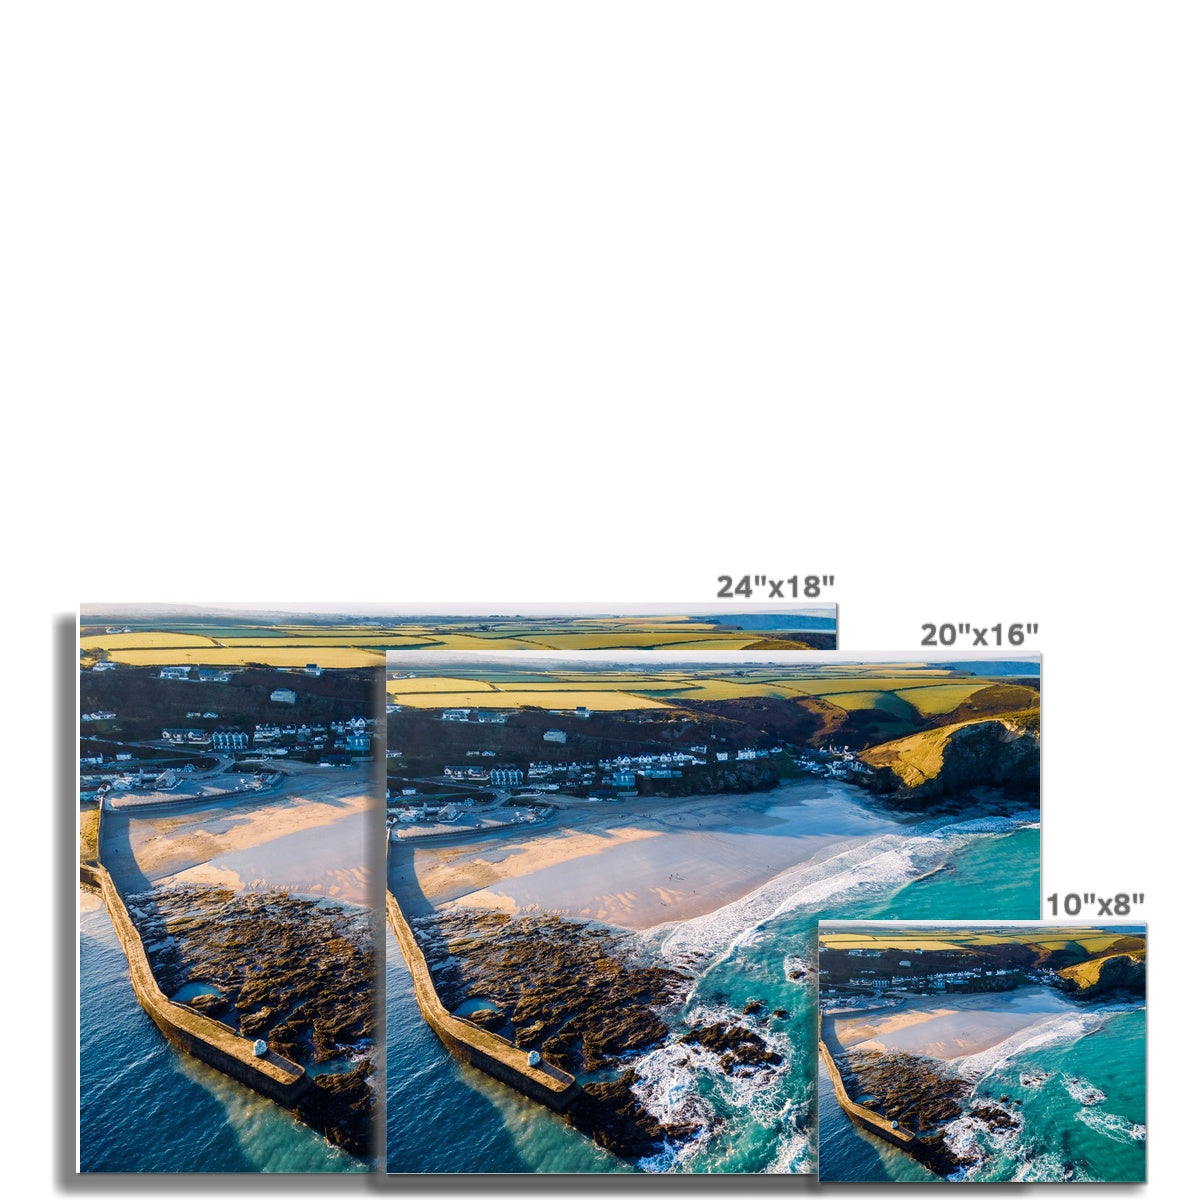 portreath harbour picture sizes